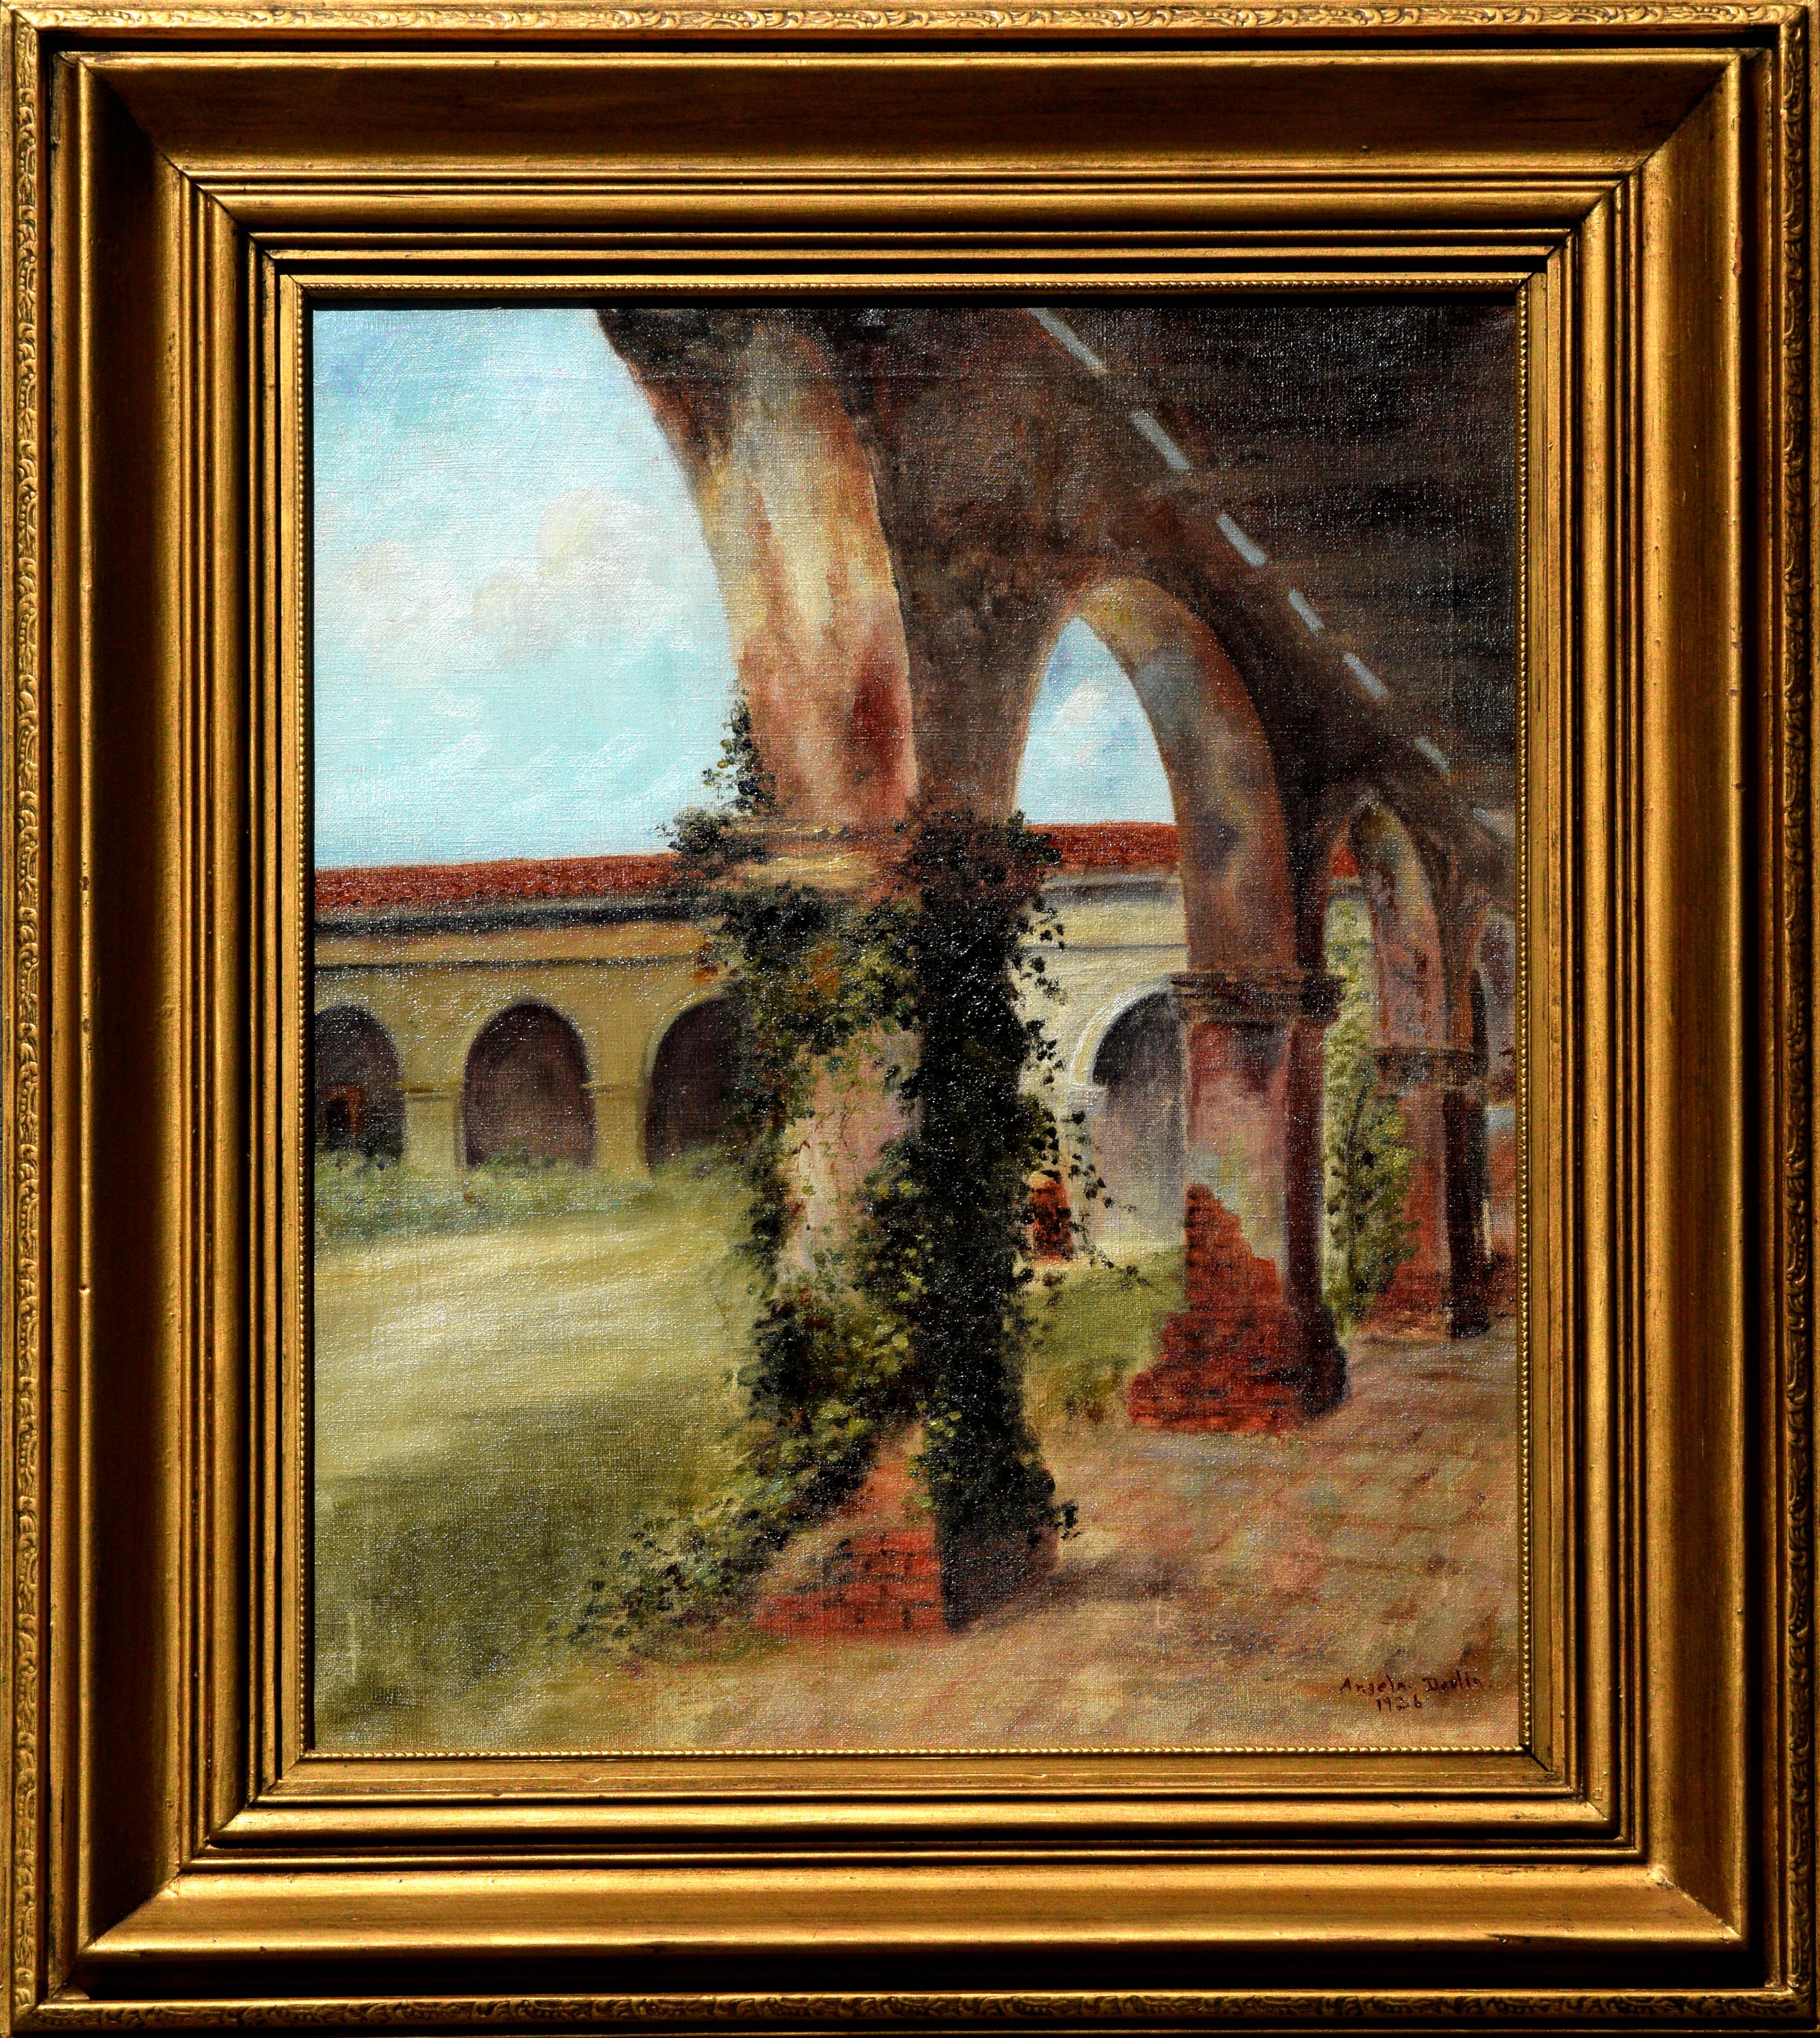 Angela Devlin Landscape Painting - 1920s California Mission San Juan Capistrano Courtyard Column Garden Landscape 